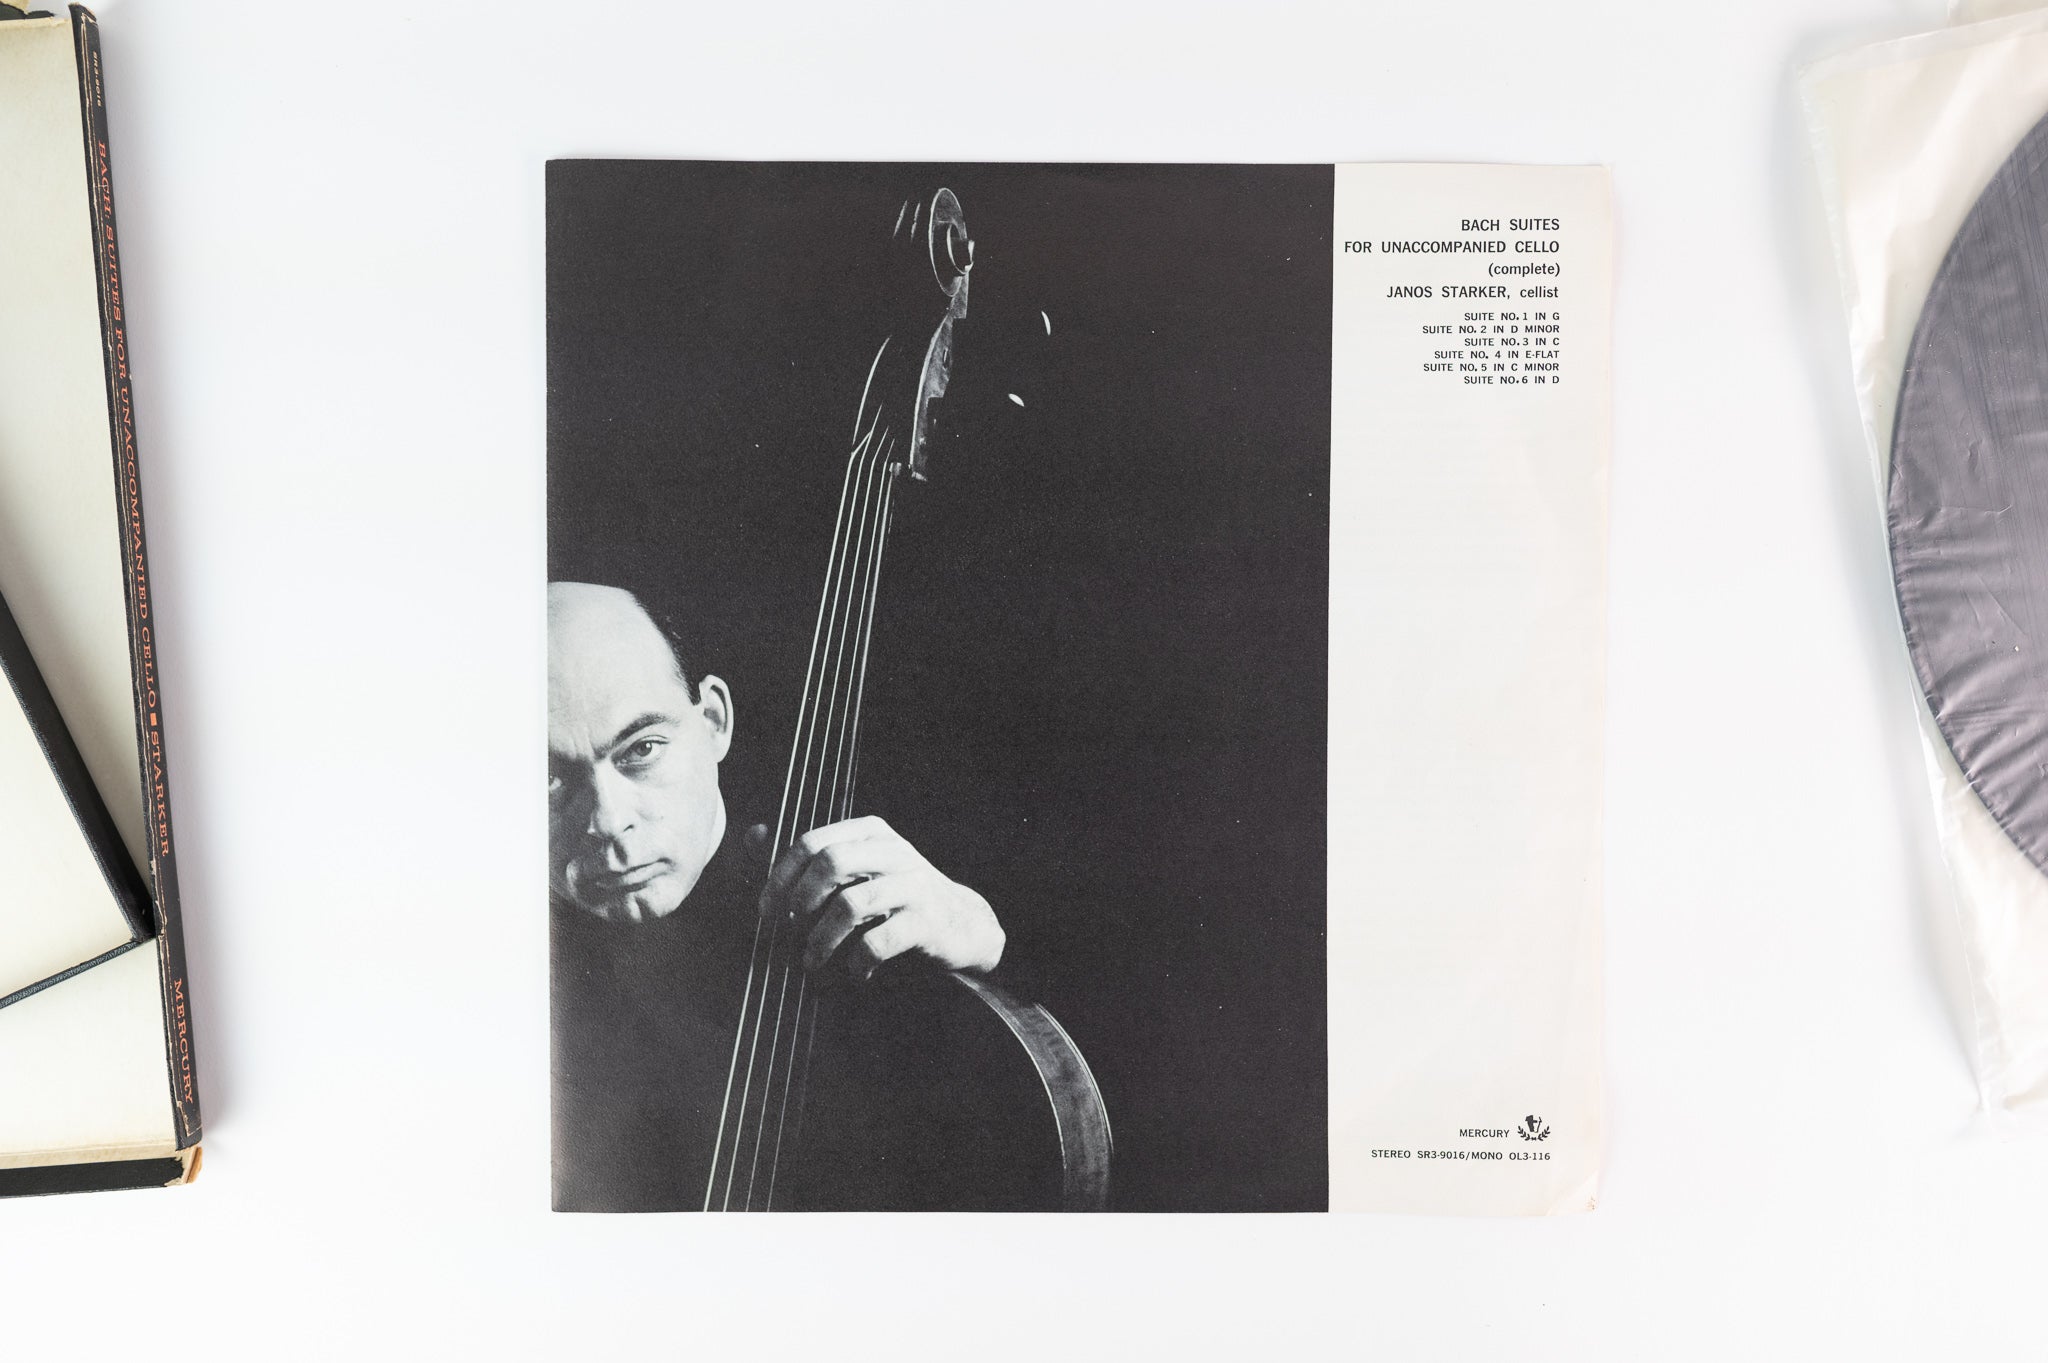 Johann Sebastian Bach - Janos Starker - Suites For Unaccompanied Cello Complete on Mercury Stereo Gold Label Promo